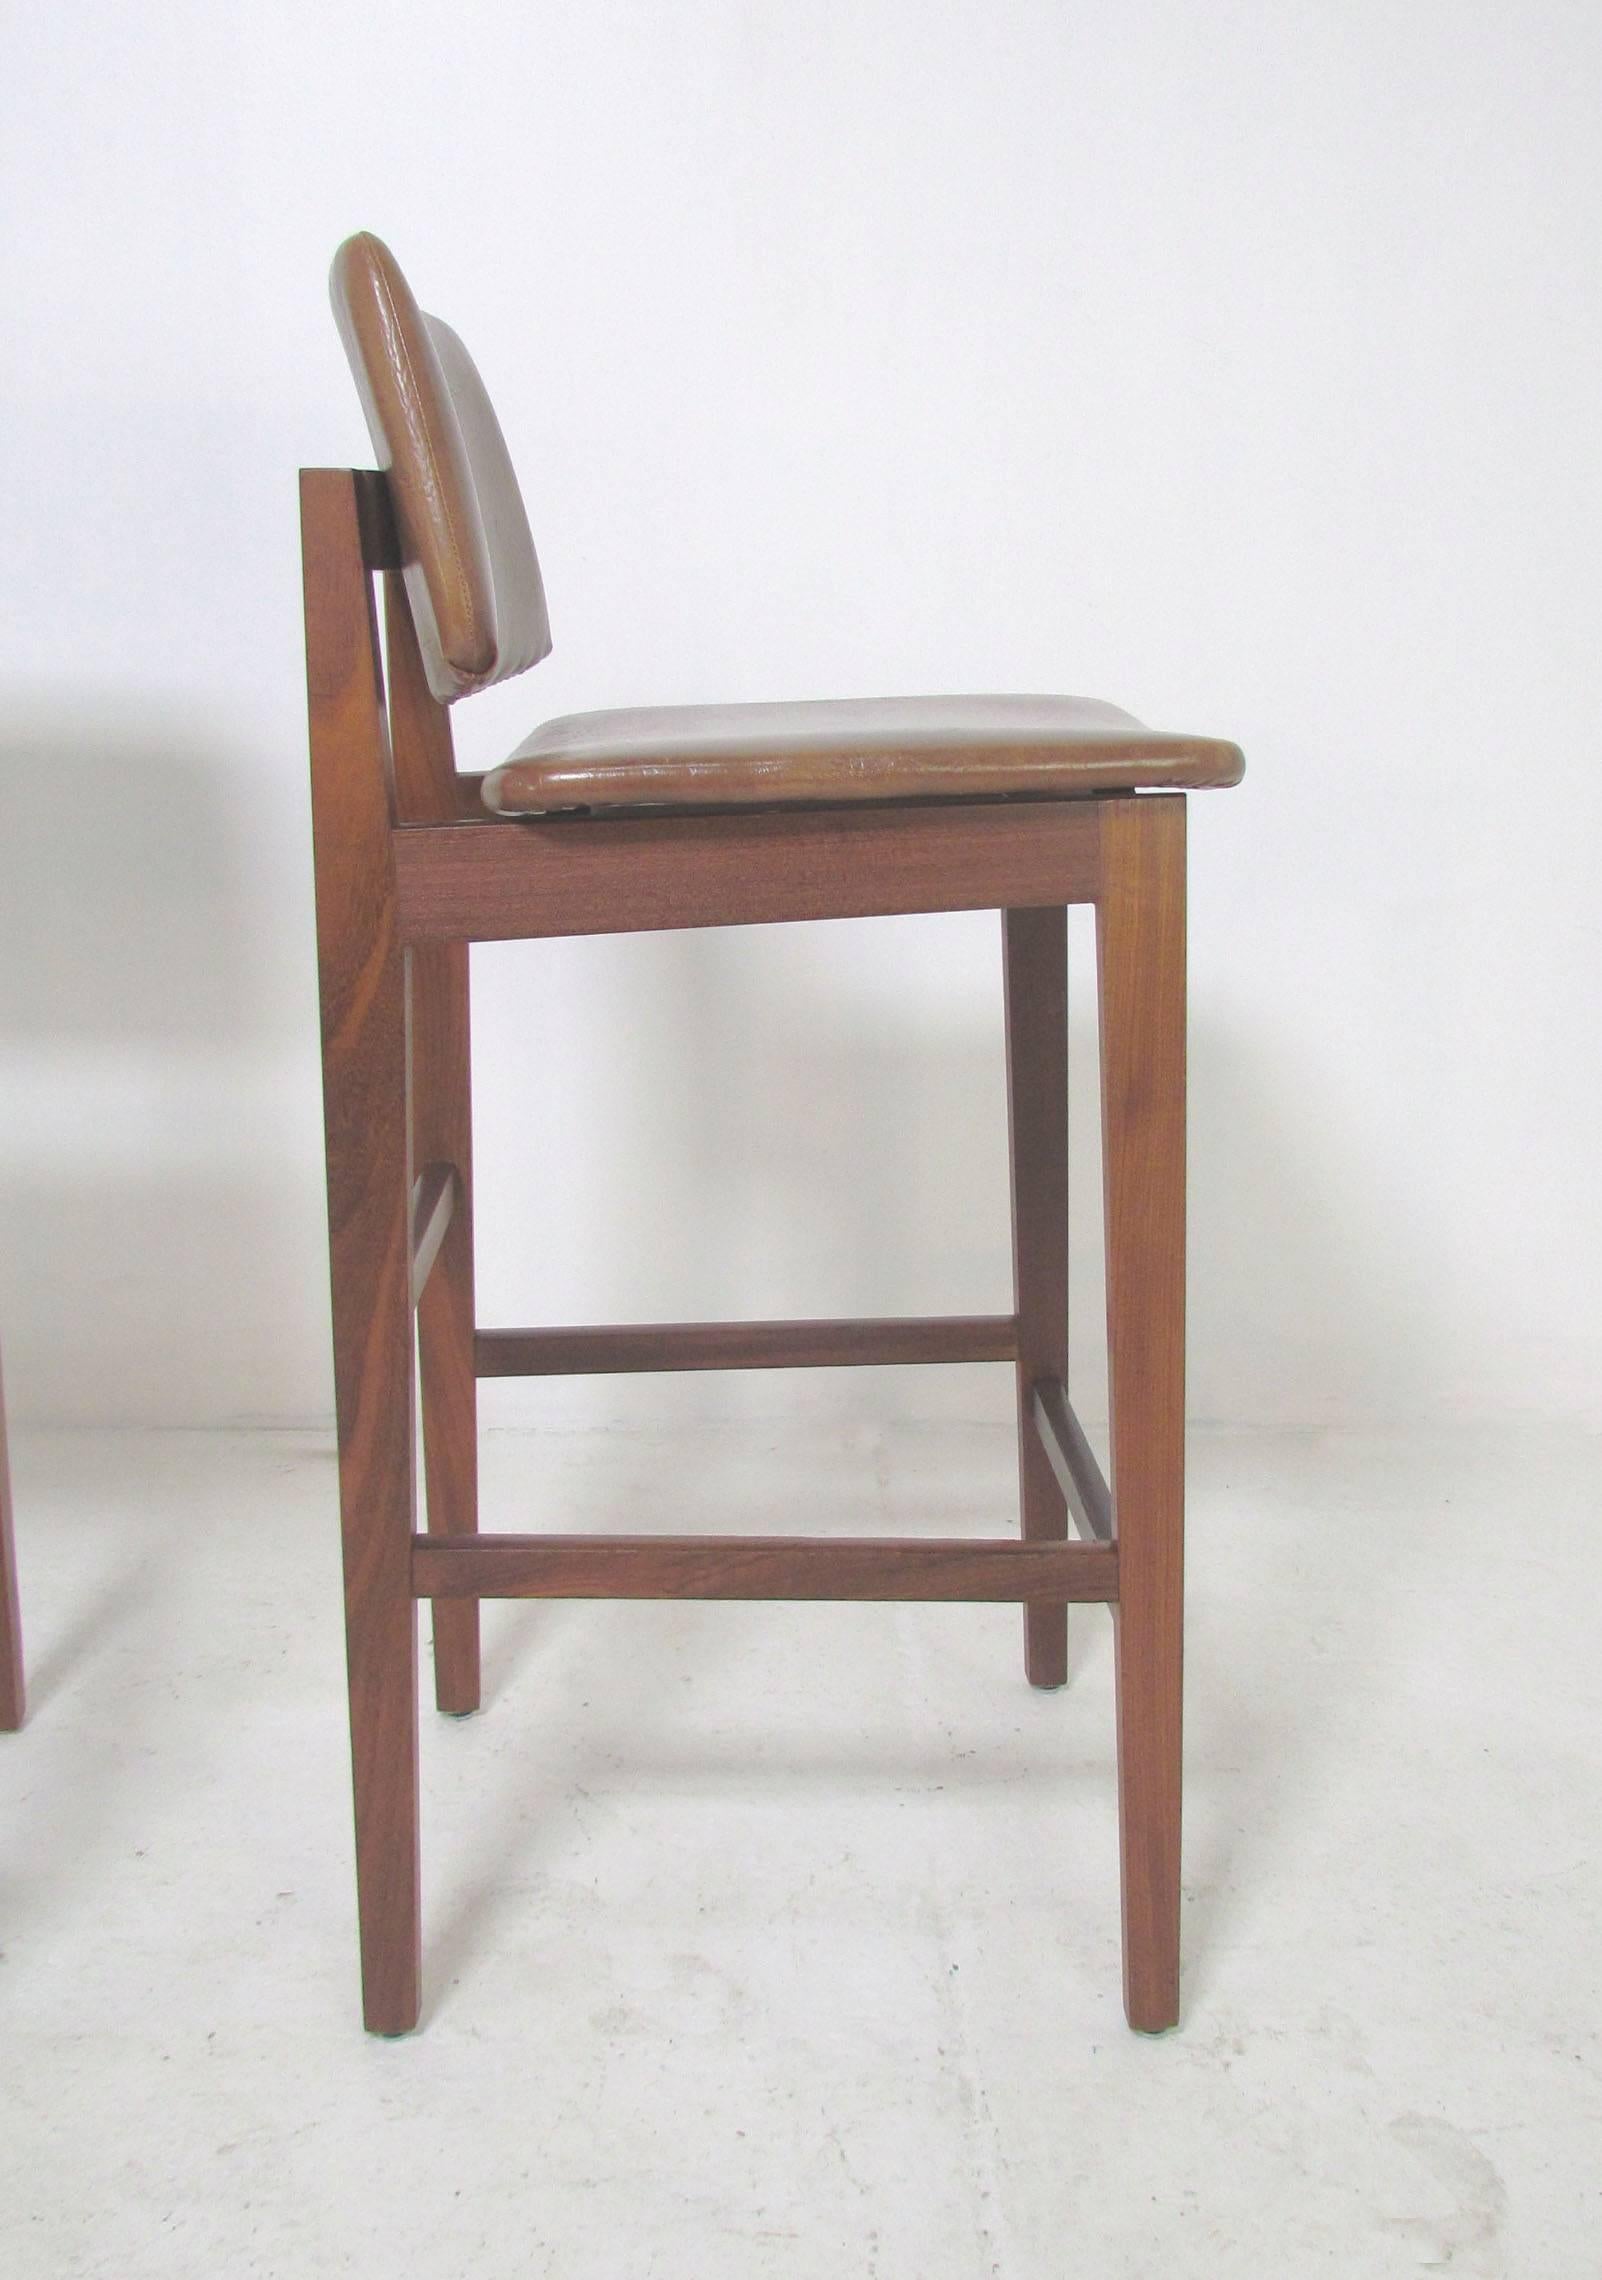 Set of three Danish modern style teak bar stools by RS Associates, Montreal, circa 1960s.

Measures: 16